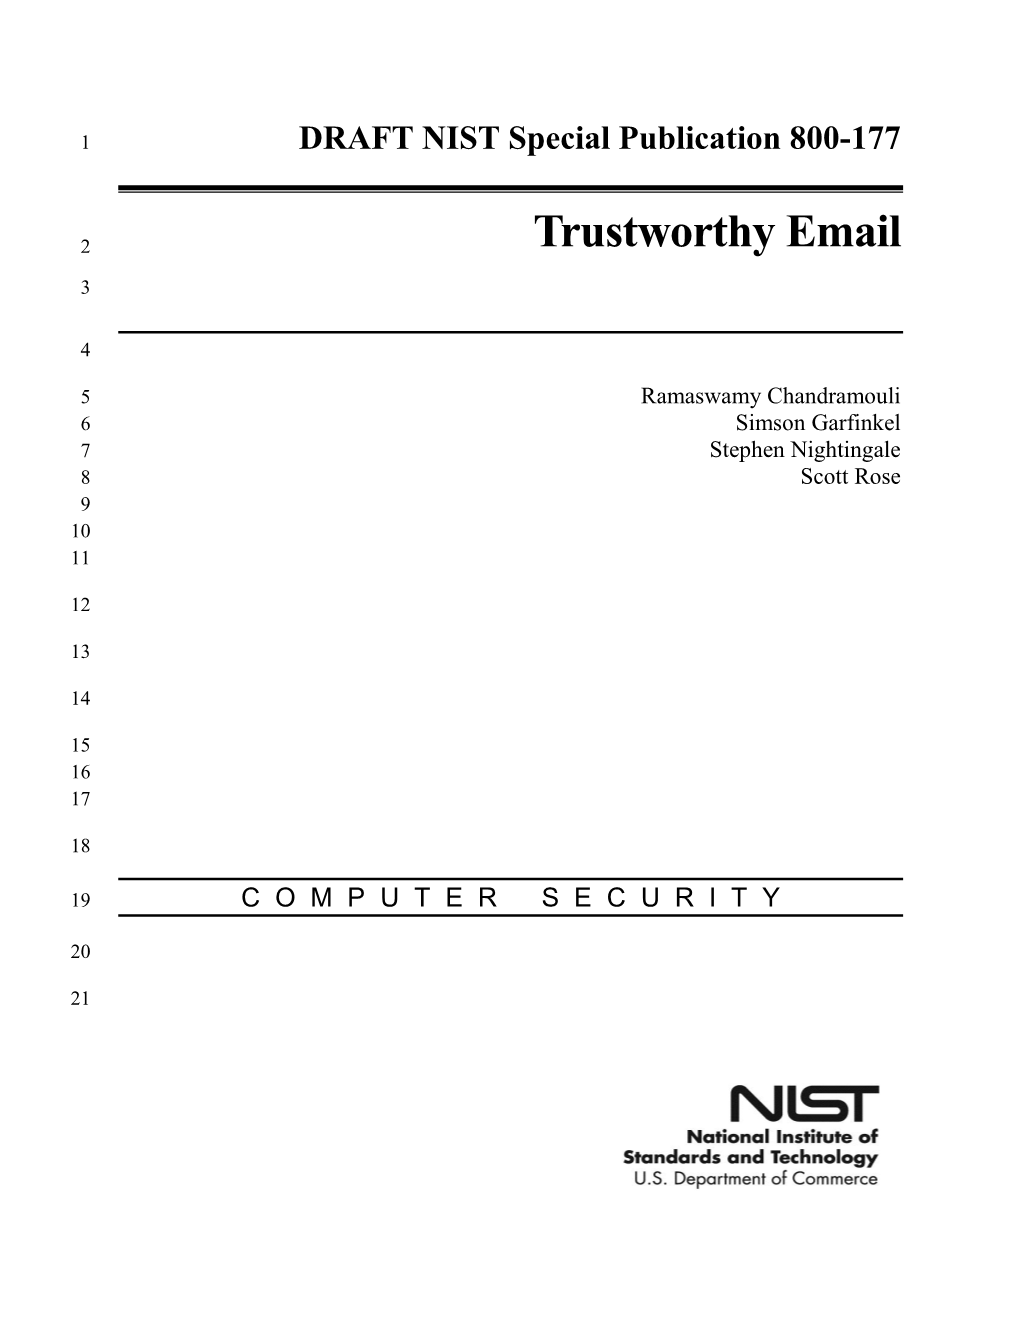 Draft NIST Special Publication 800-177, Trustworthy Email